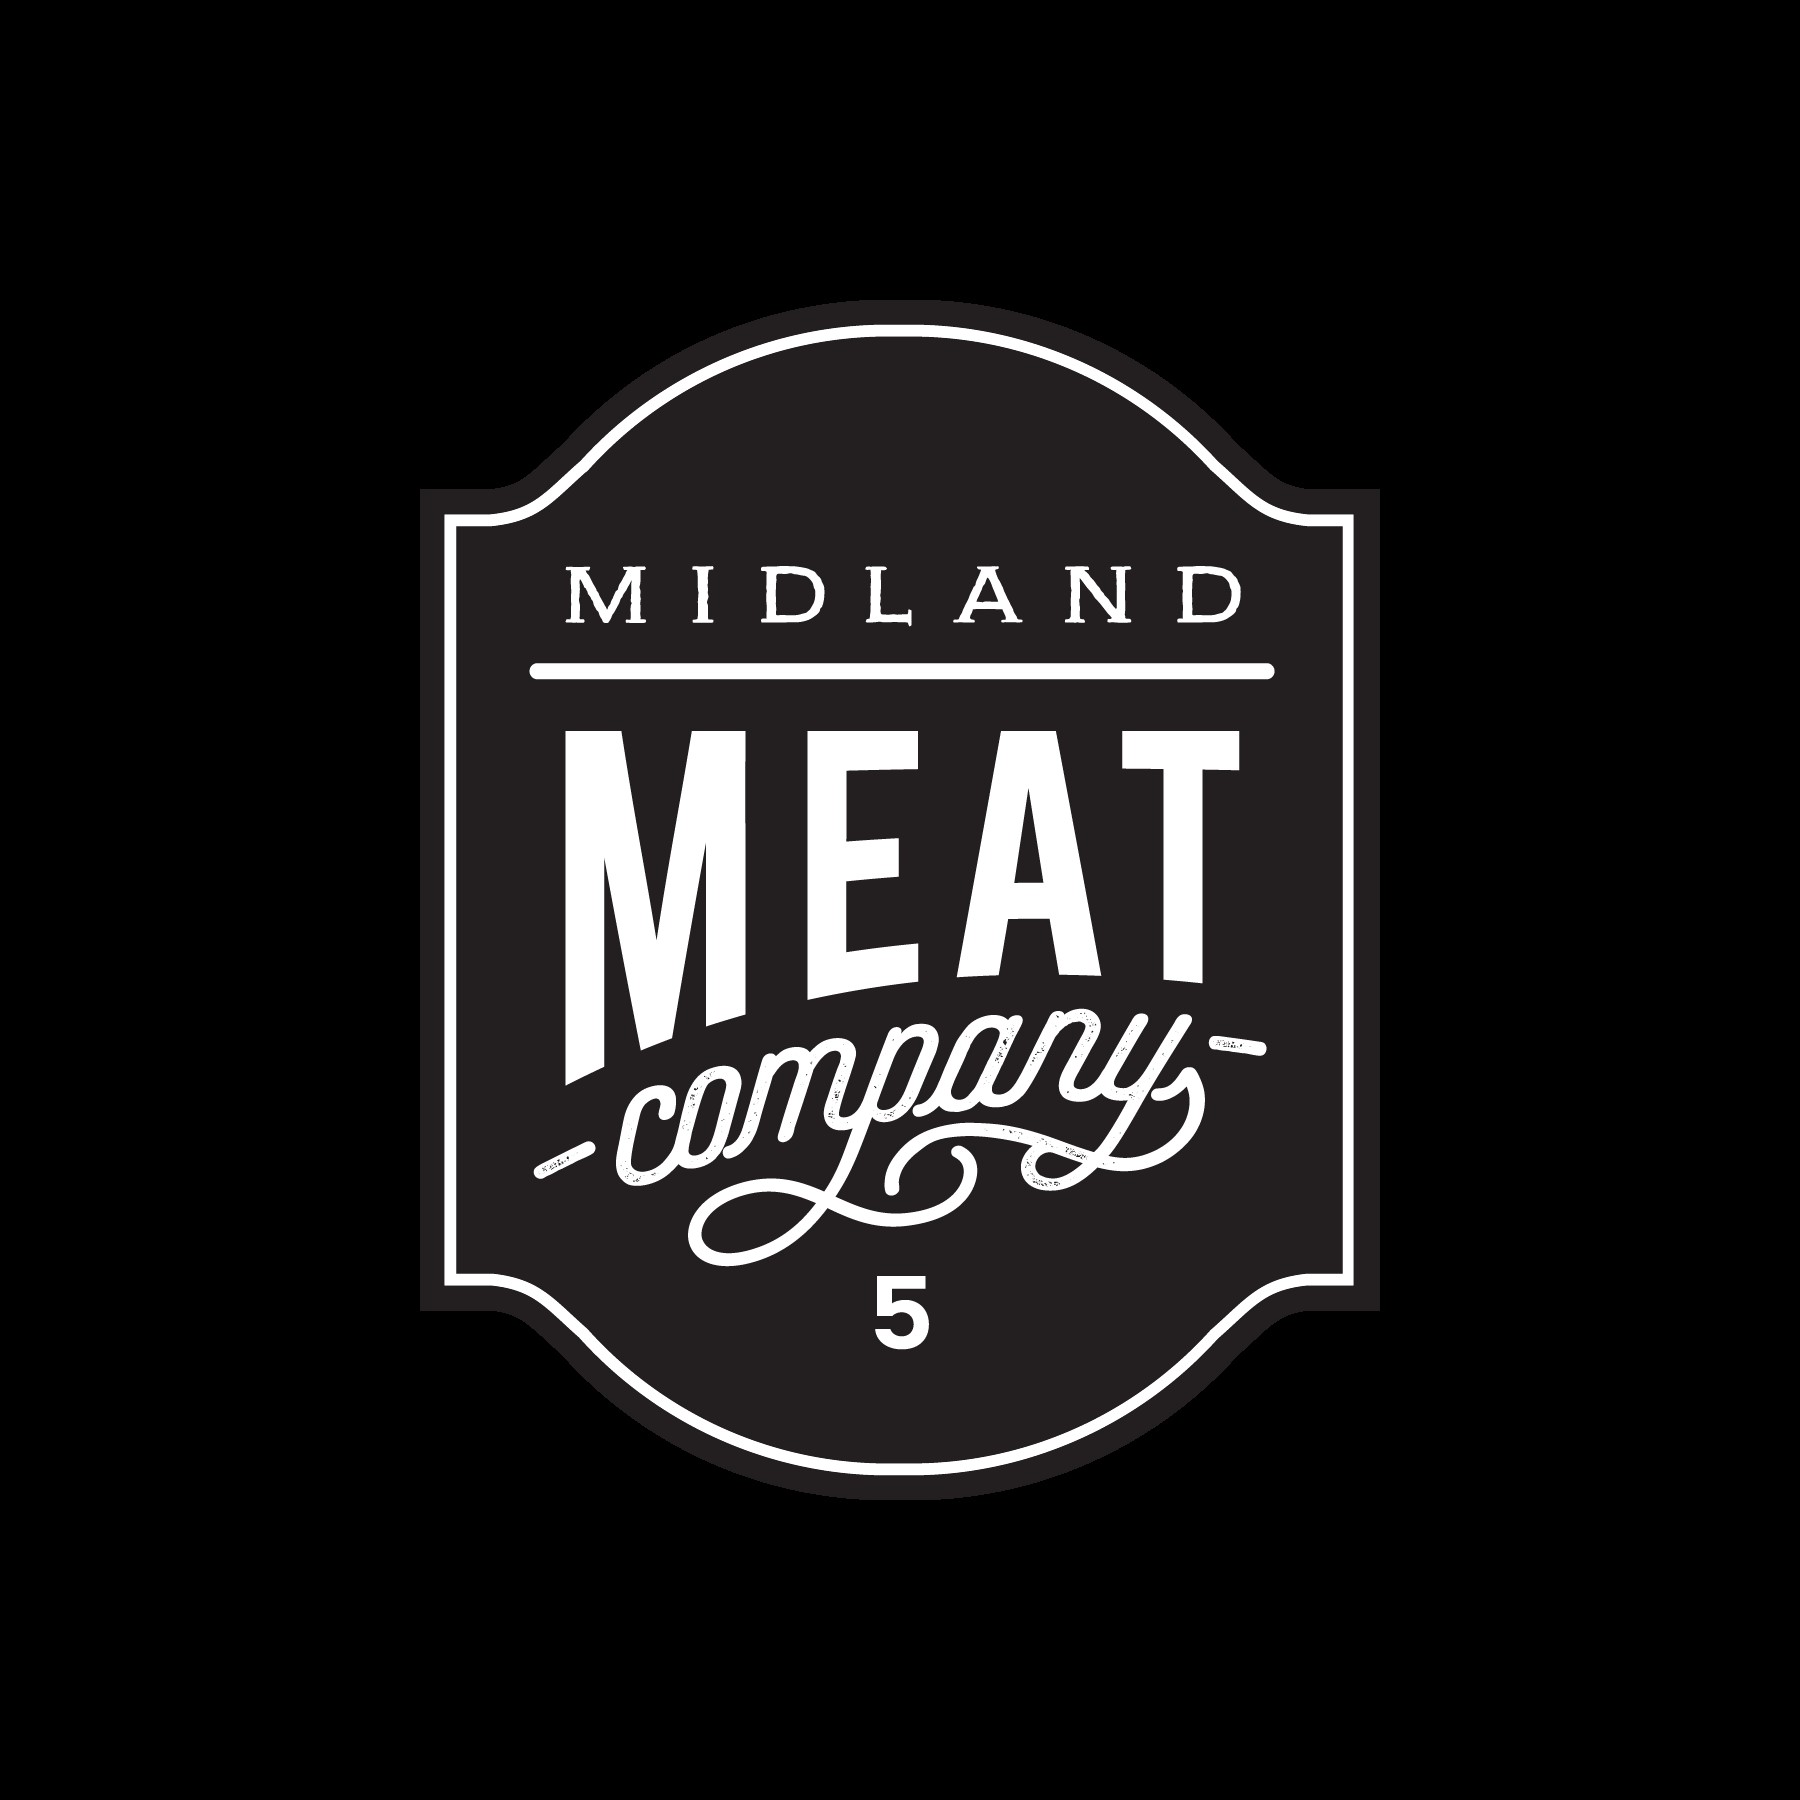 B. Midland Meat Company (Promise Garden)